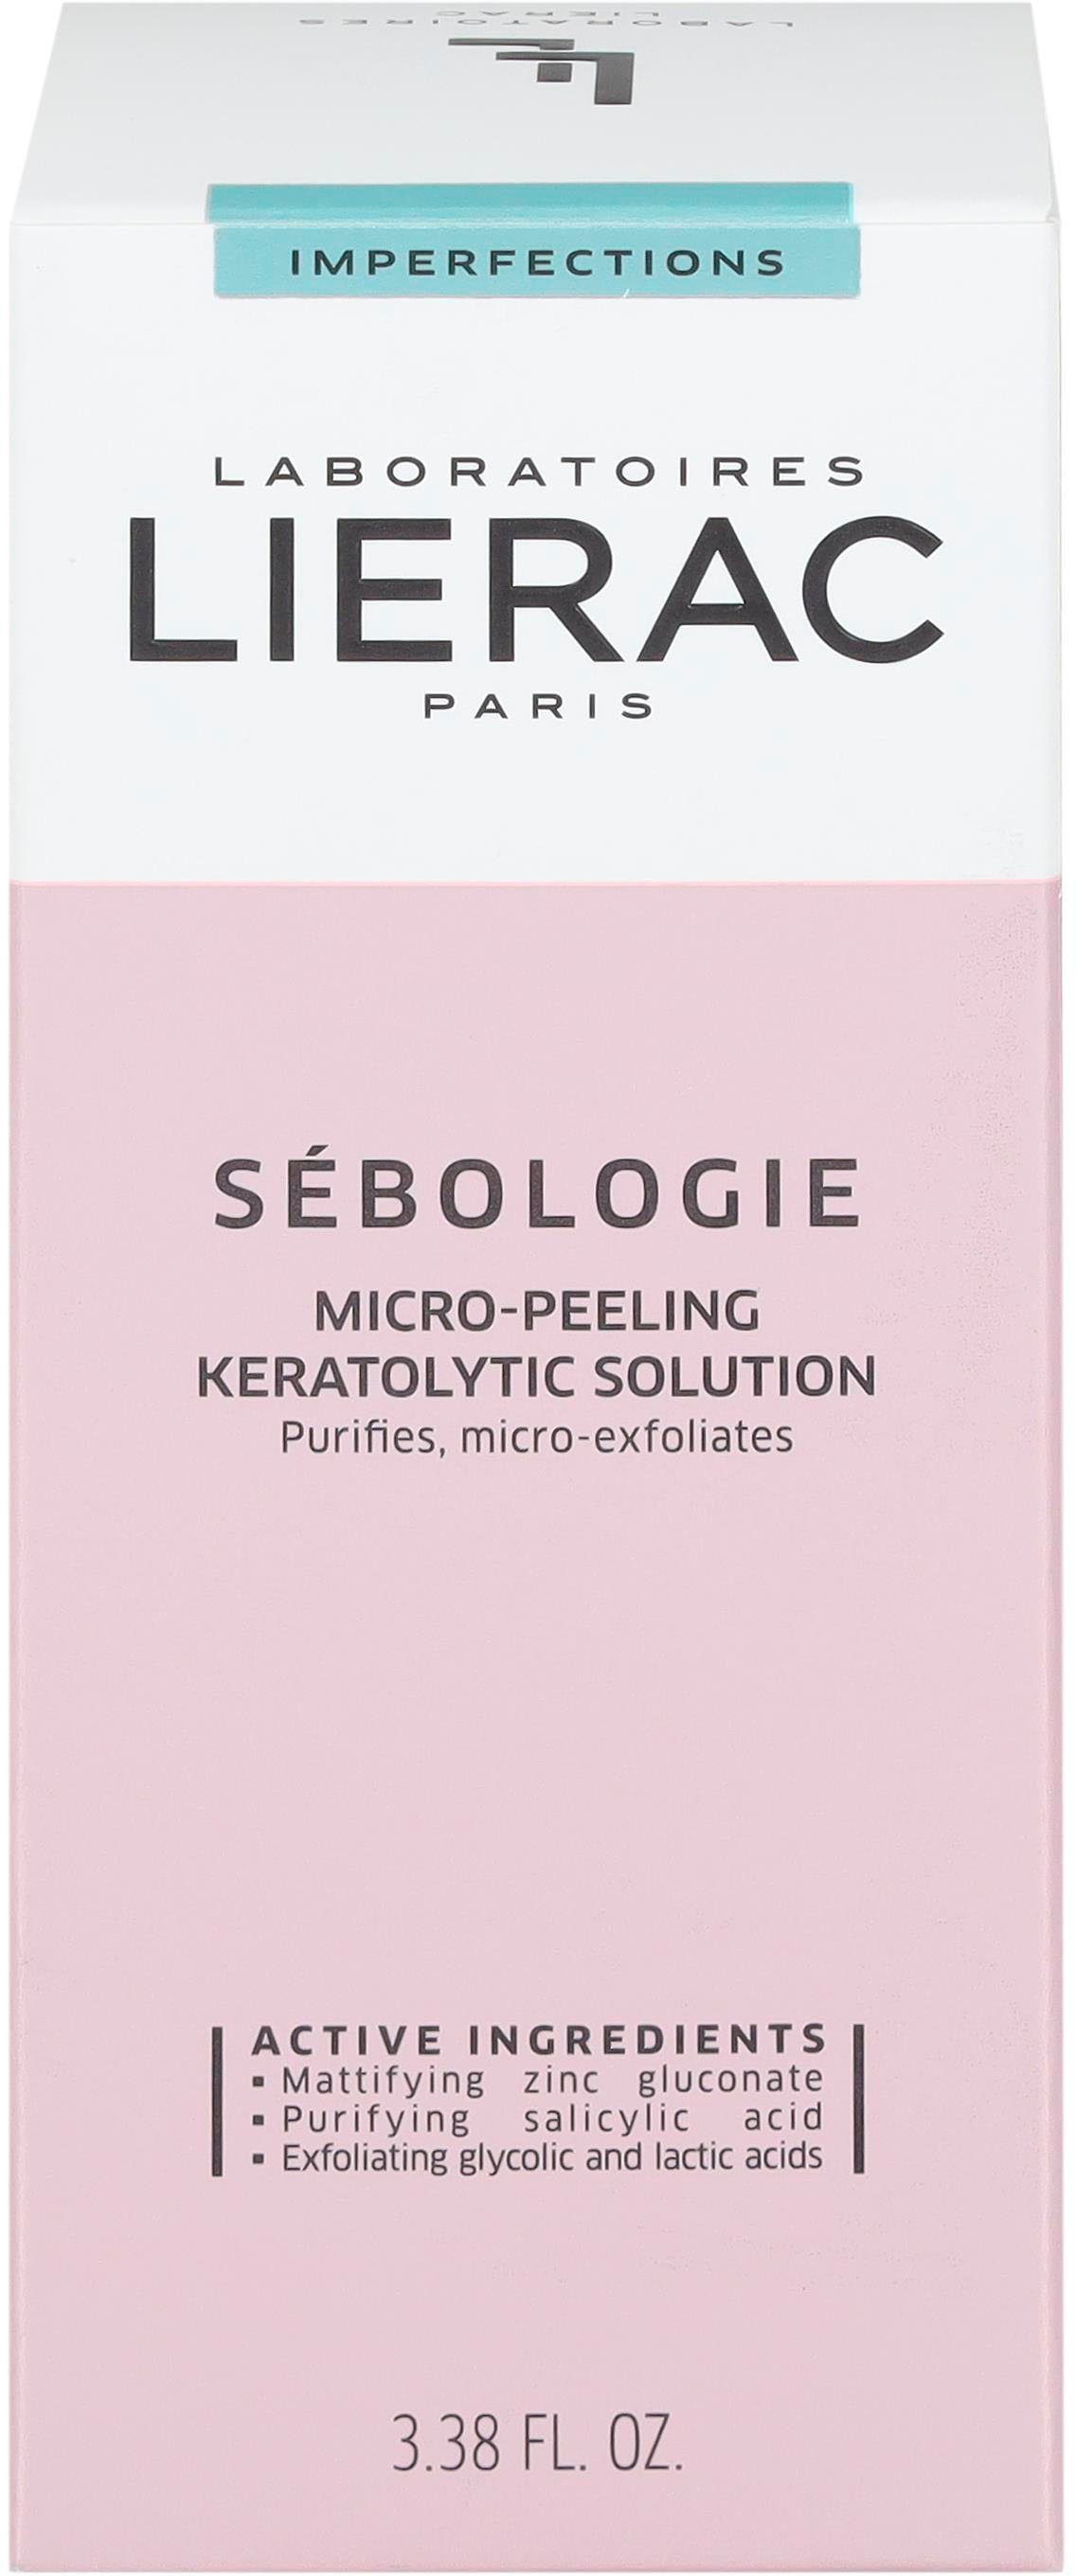 LIERAC Gesichts-Reinigungsfluid Sebologie Micro-Peeling Solution Keratolytique